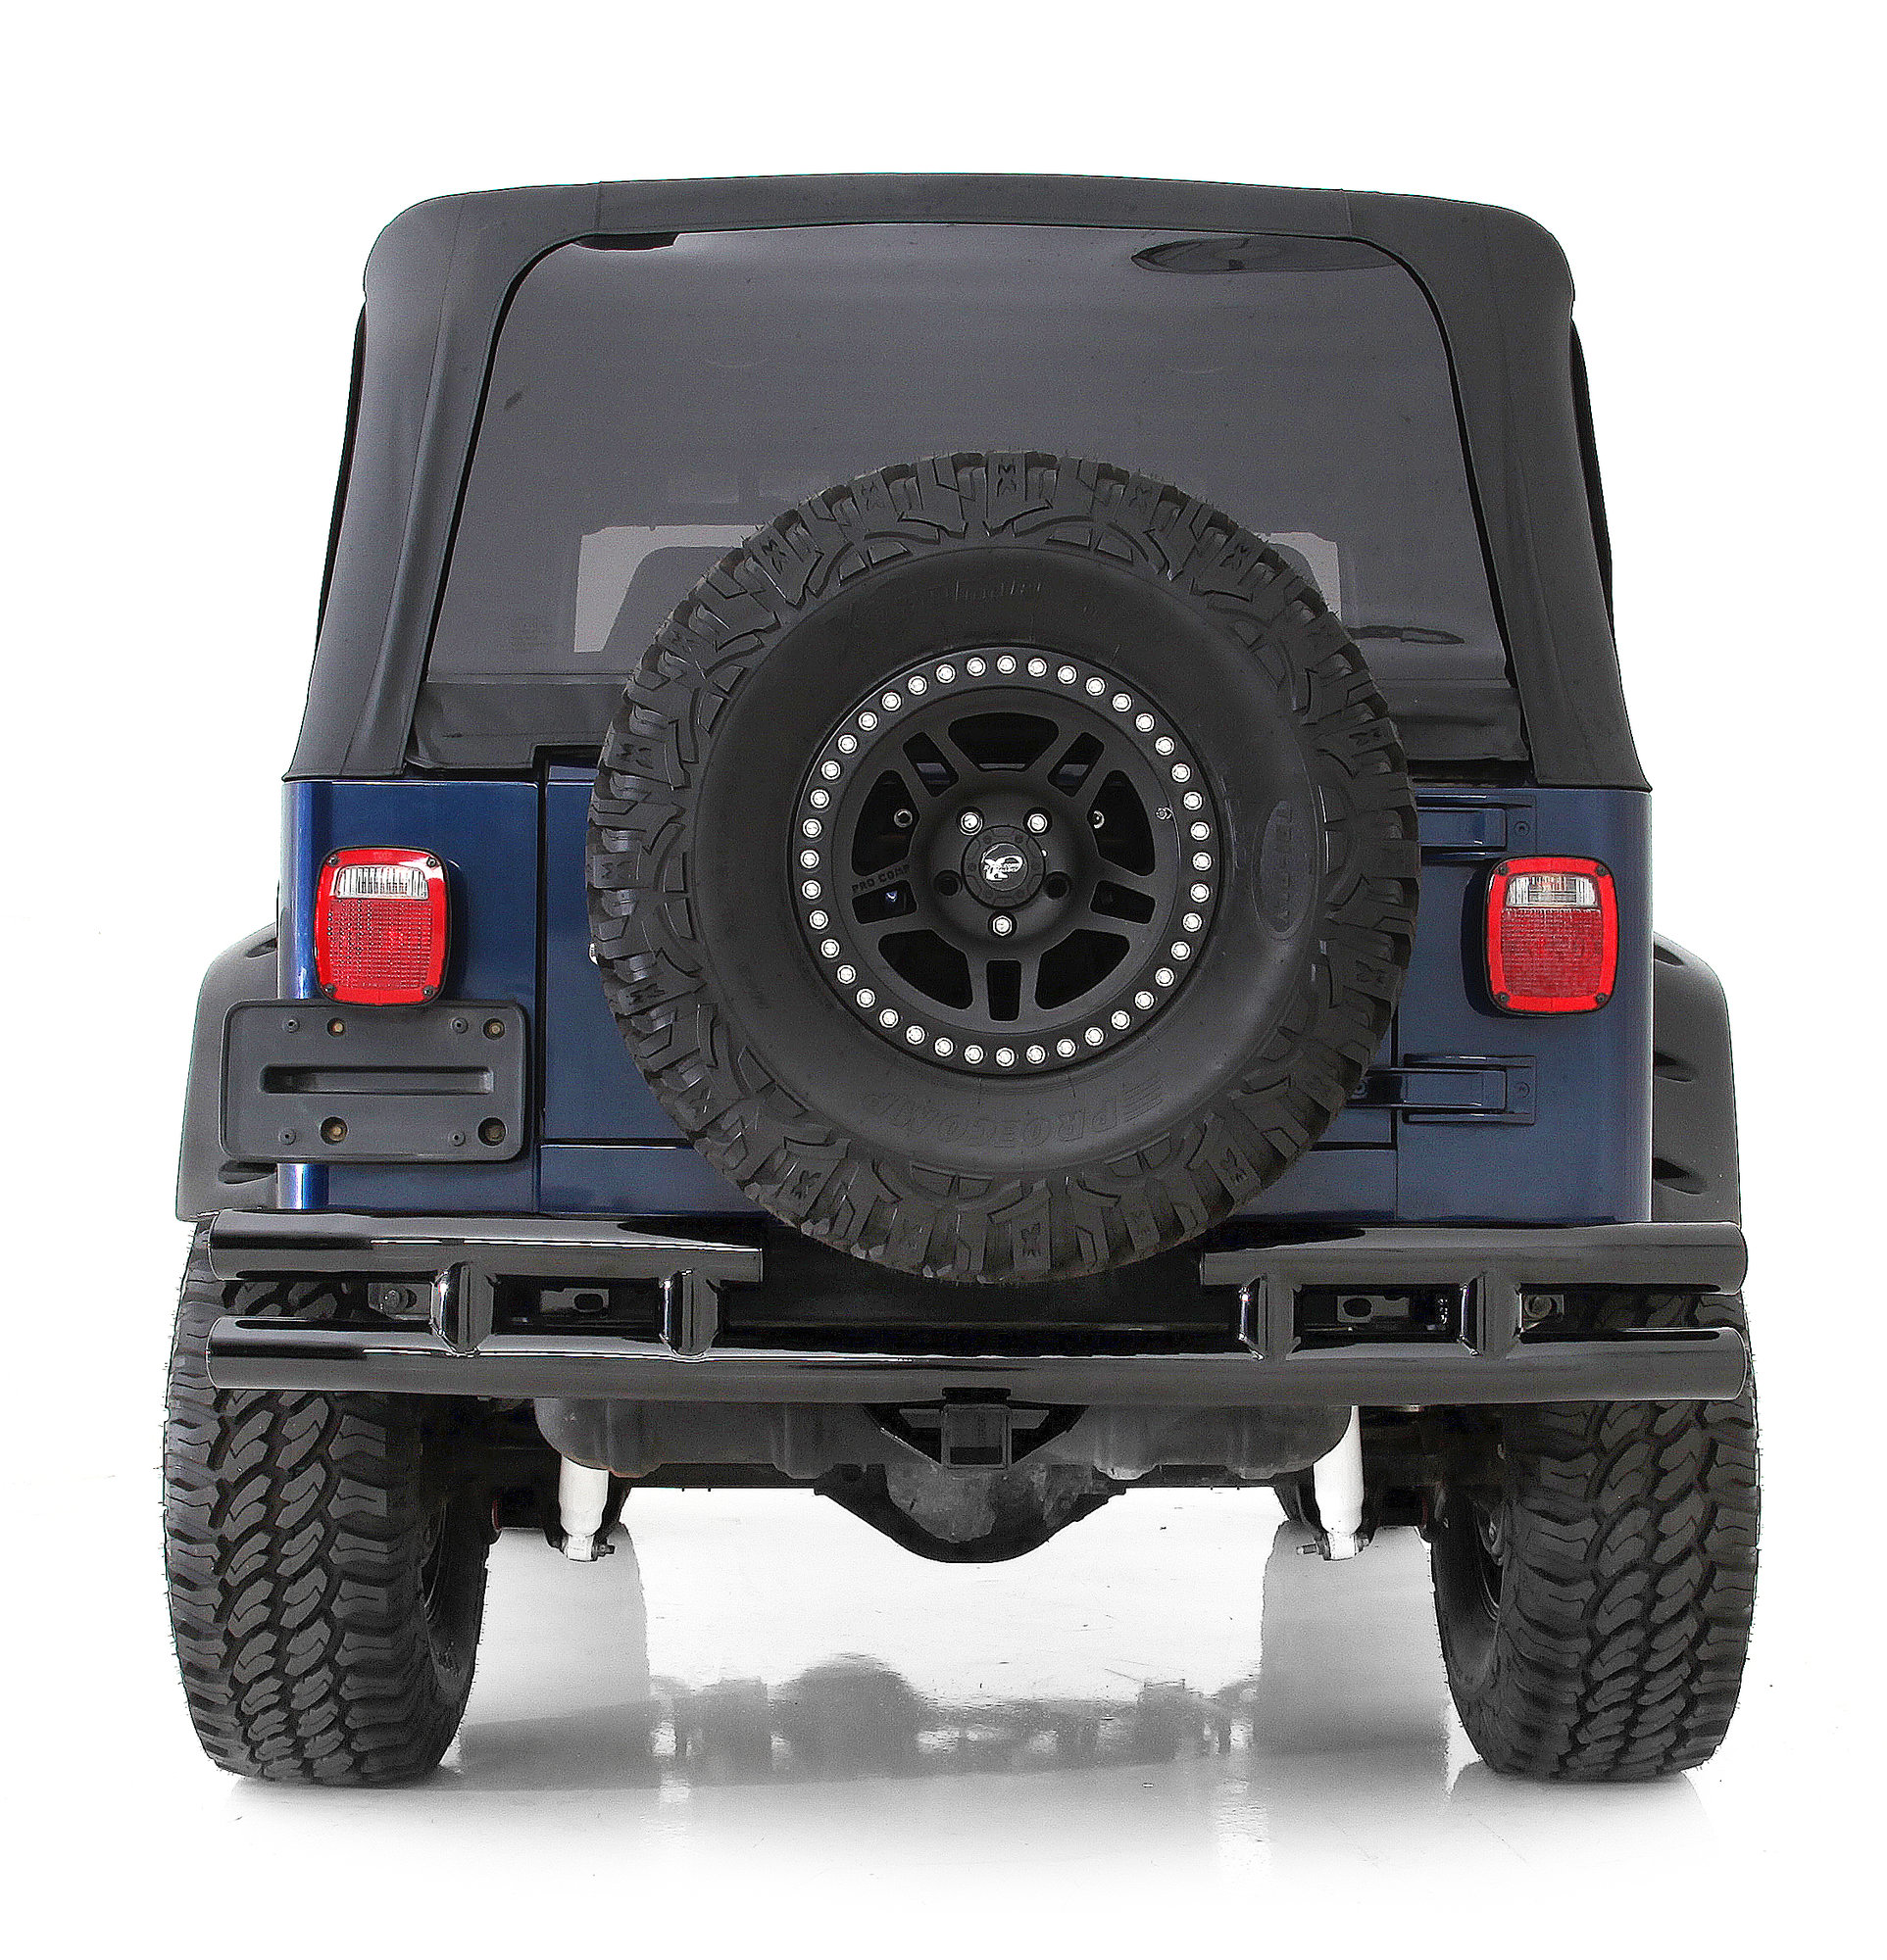 Smittybilt Rear Tubular Bumper with Hitch for 87-06 Jeep® Wrangler YJ, TJ & Unlimited | Quadratec